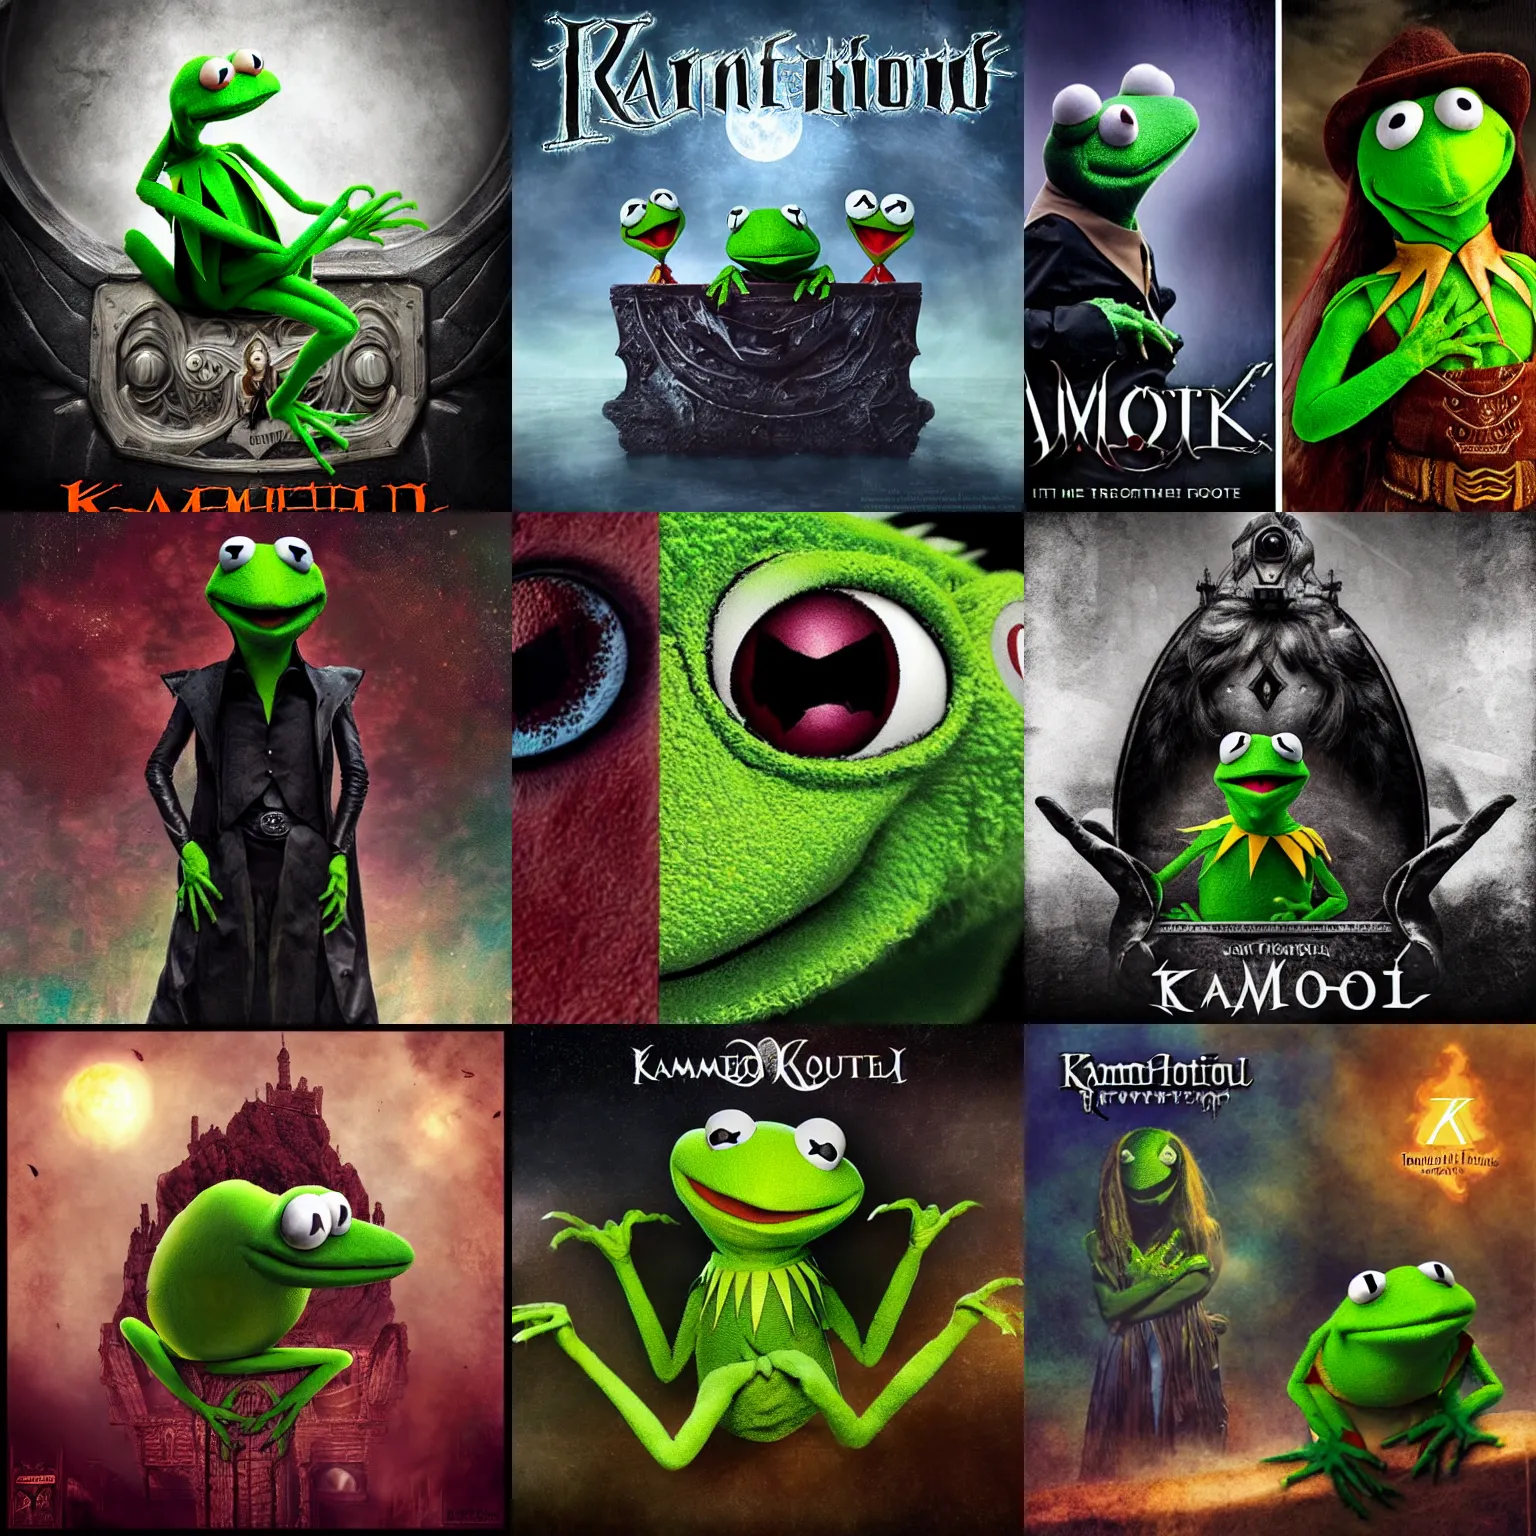 Prompt: kamelot album cover featuring kermit the frog, art by stefan heilemann, photoshop collage art, power metal album cover, fantasy, horror, gothic, trending on artstation